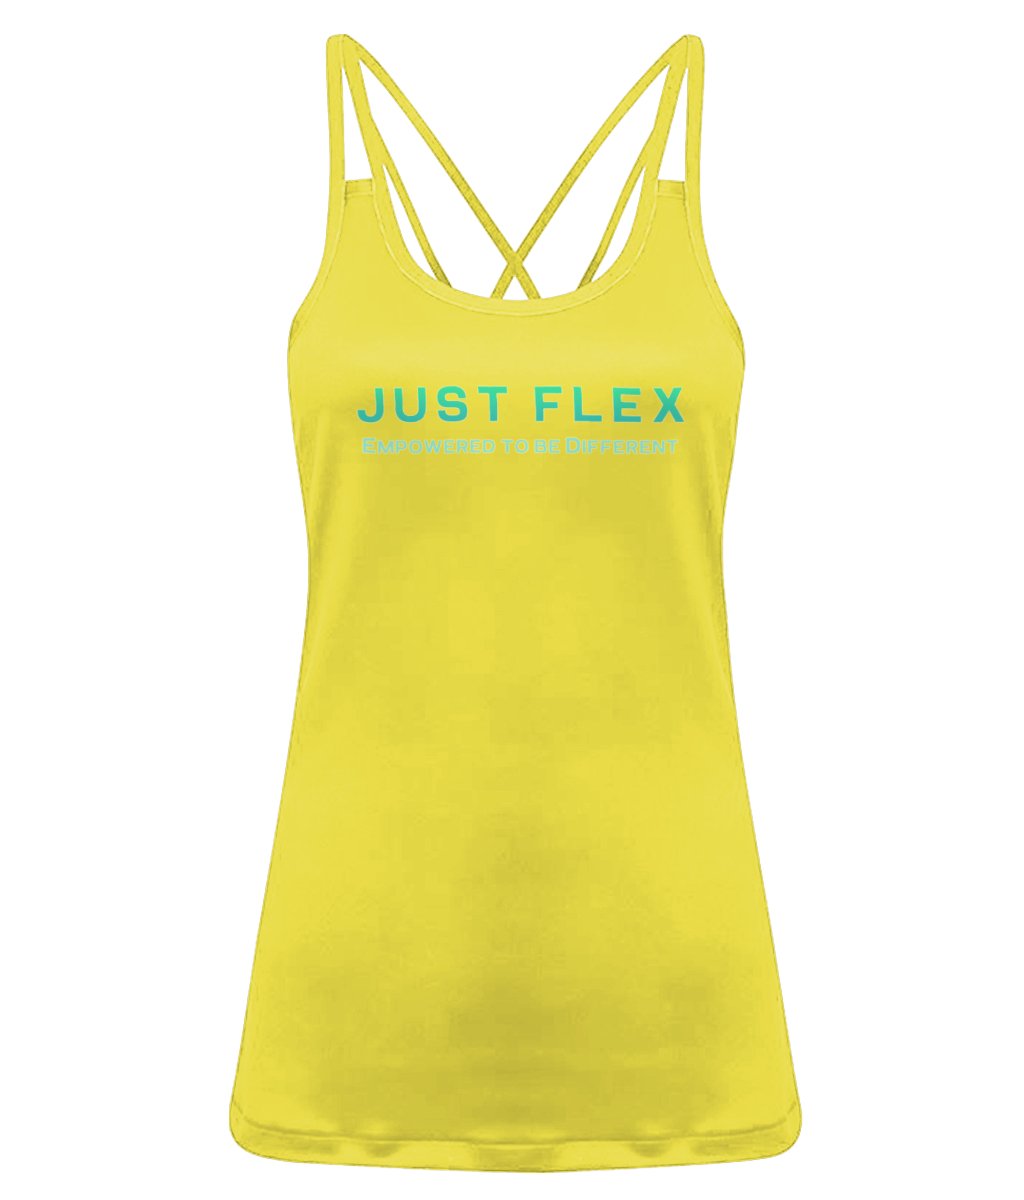 Just Flex - Empowered To Be Different Women's TriDri® 'Laser Cut' Spaghetti Strap Vest